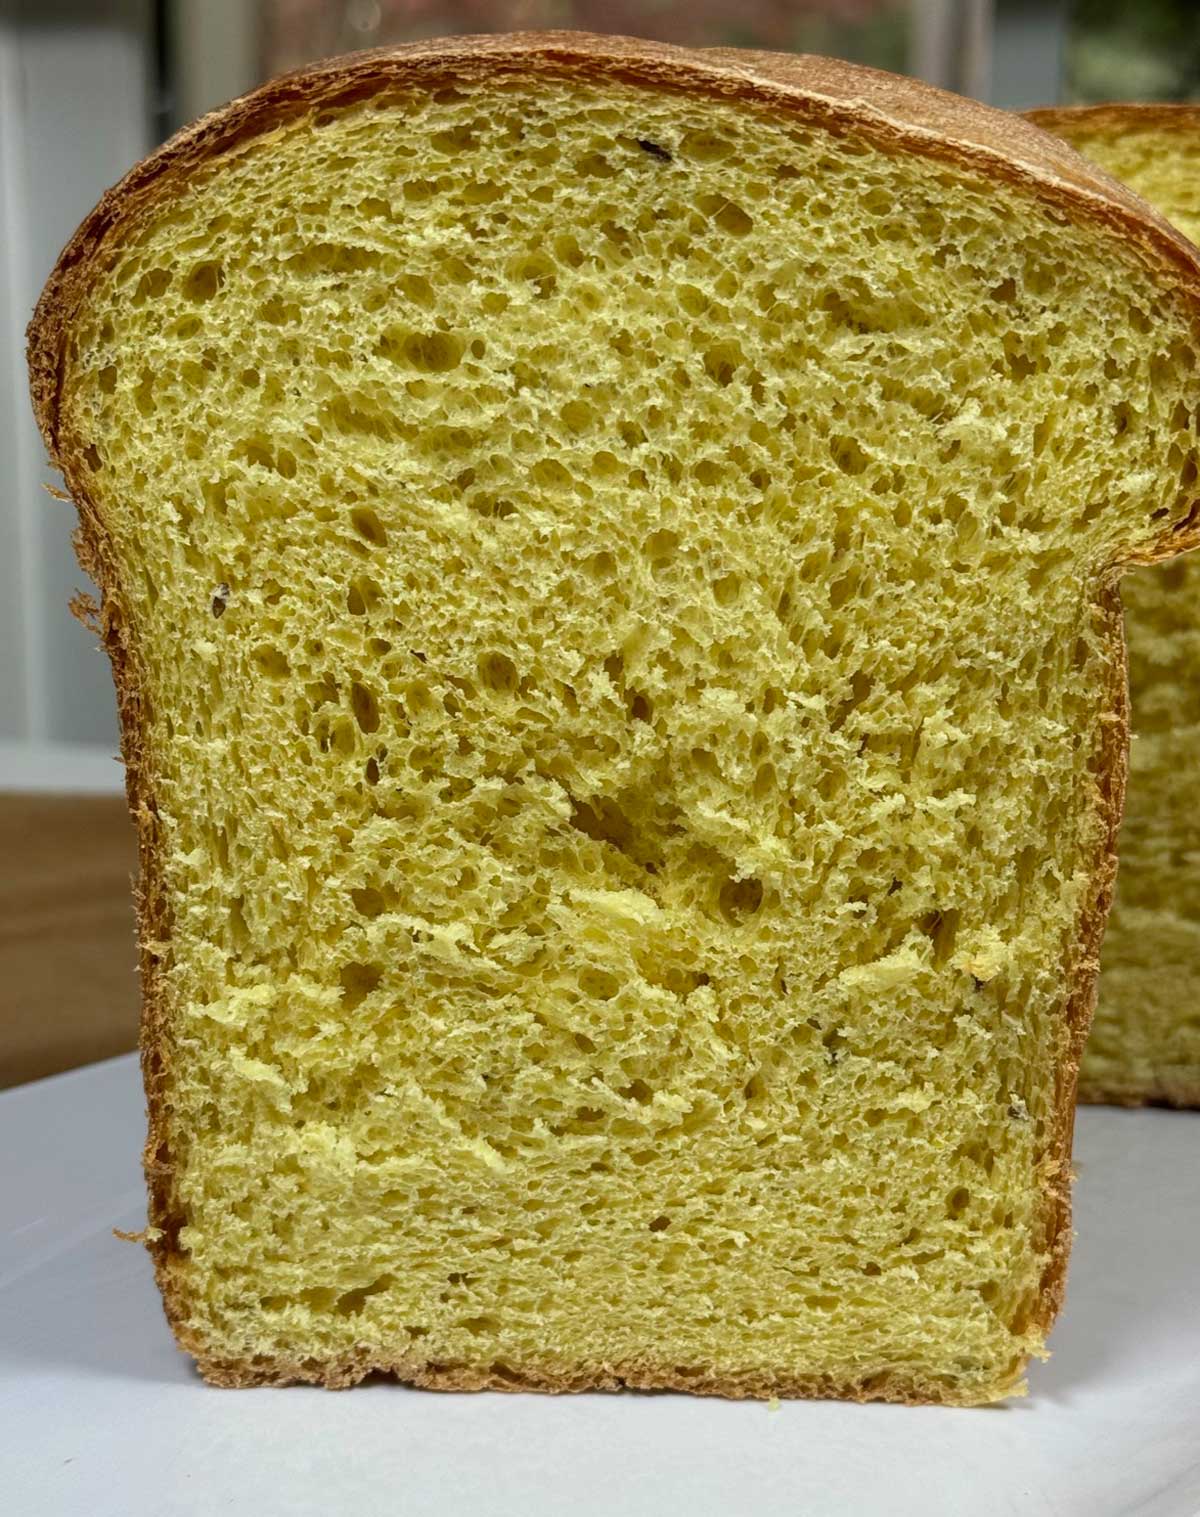 Big slice of dal bread